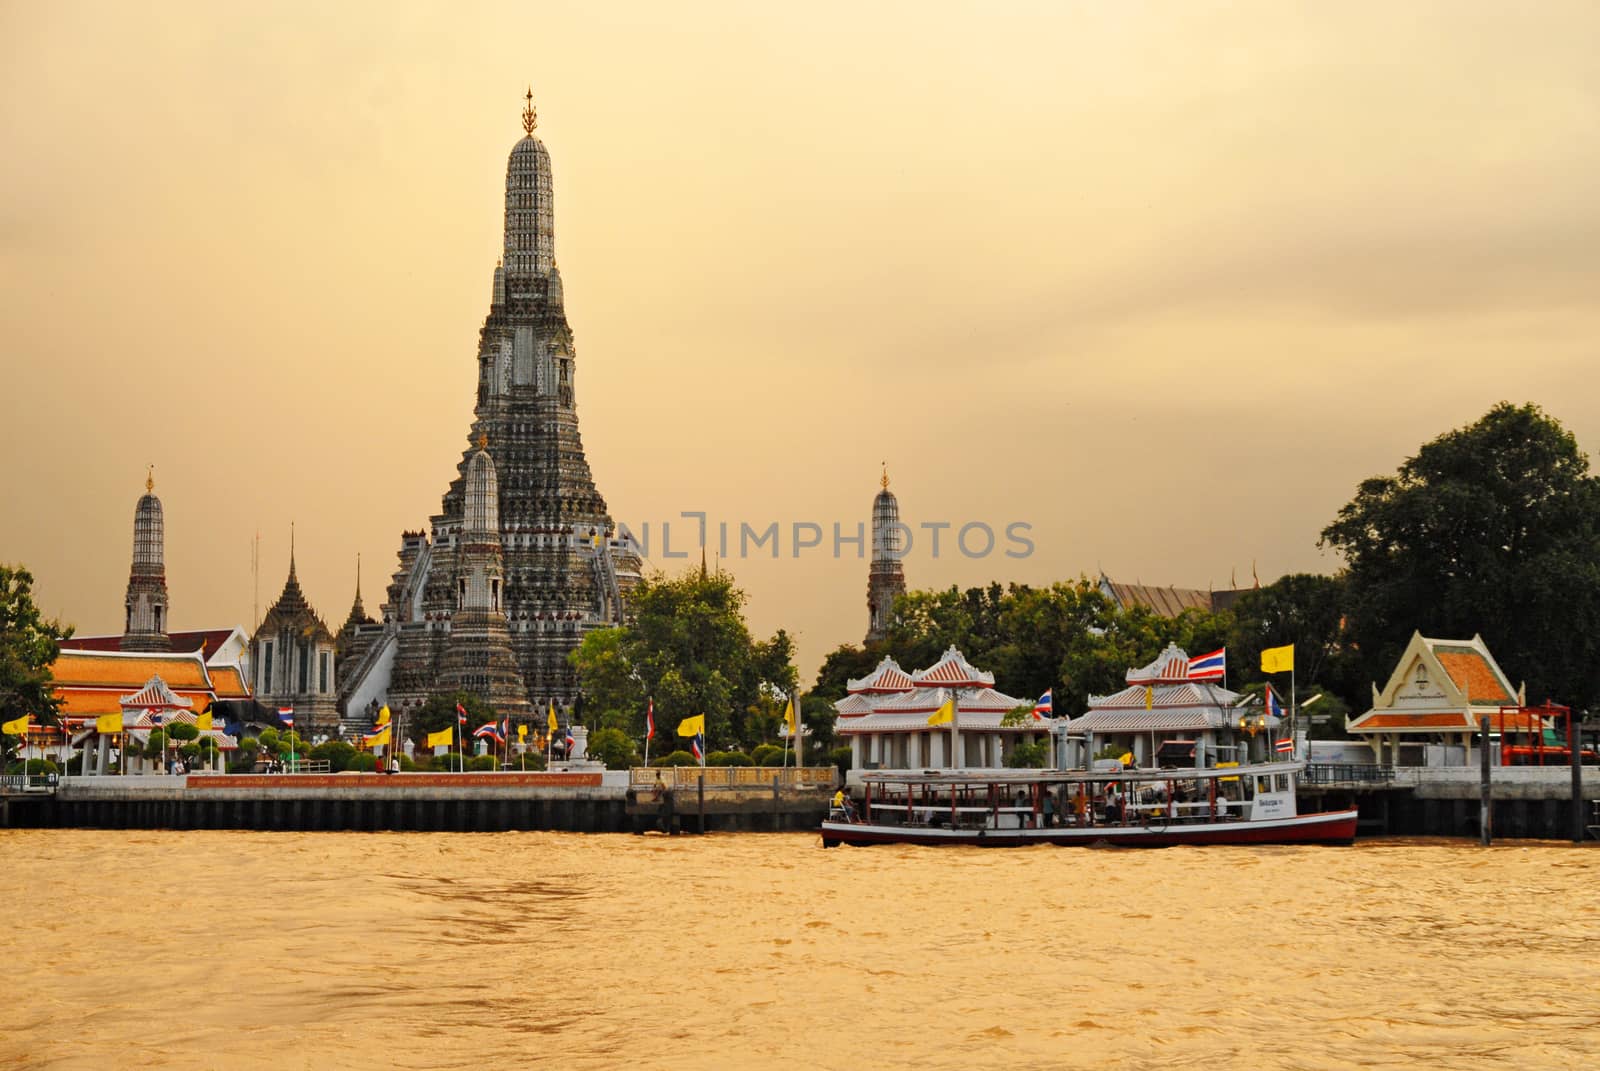 Wat arun in sunset, Bangkok Thailand by think4photop